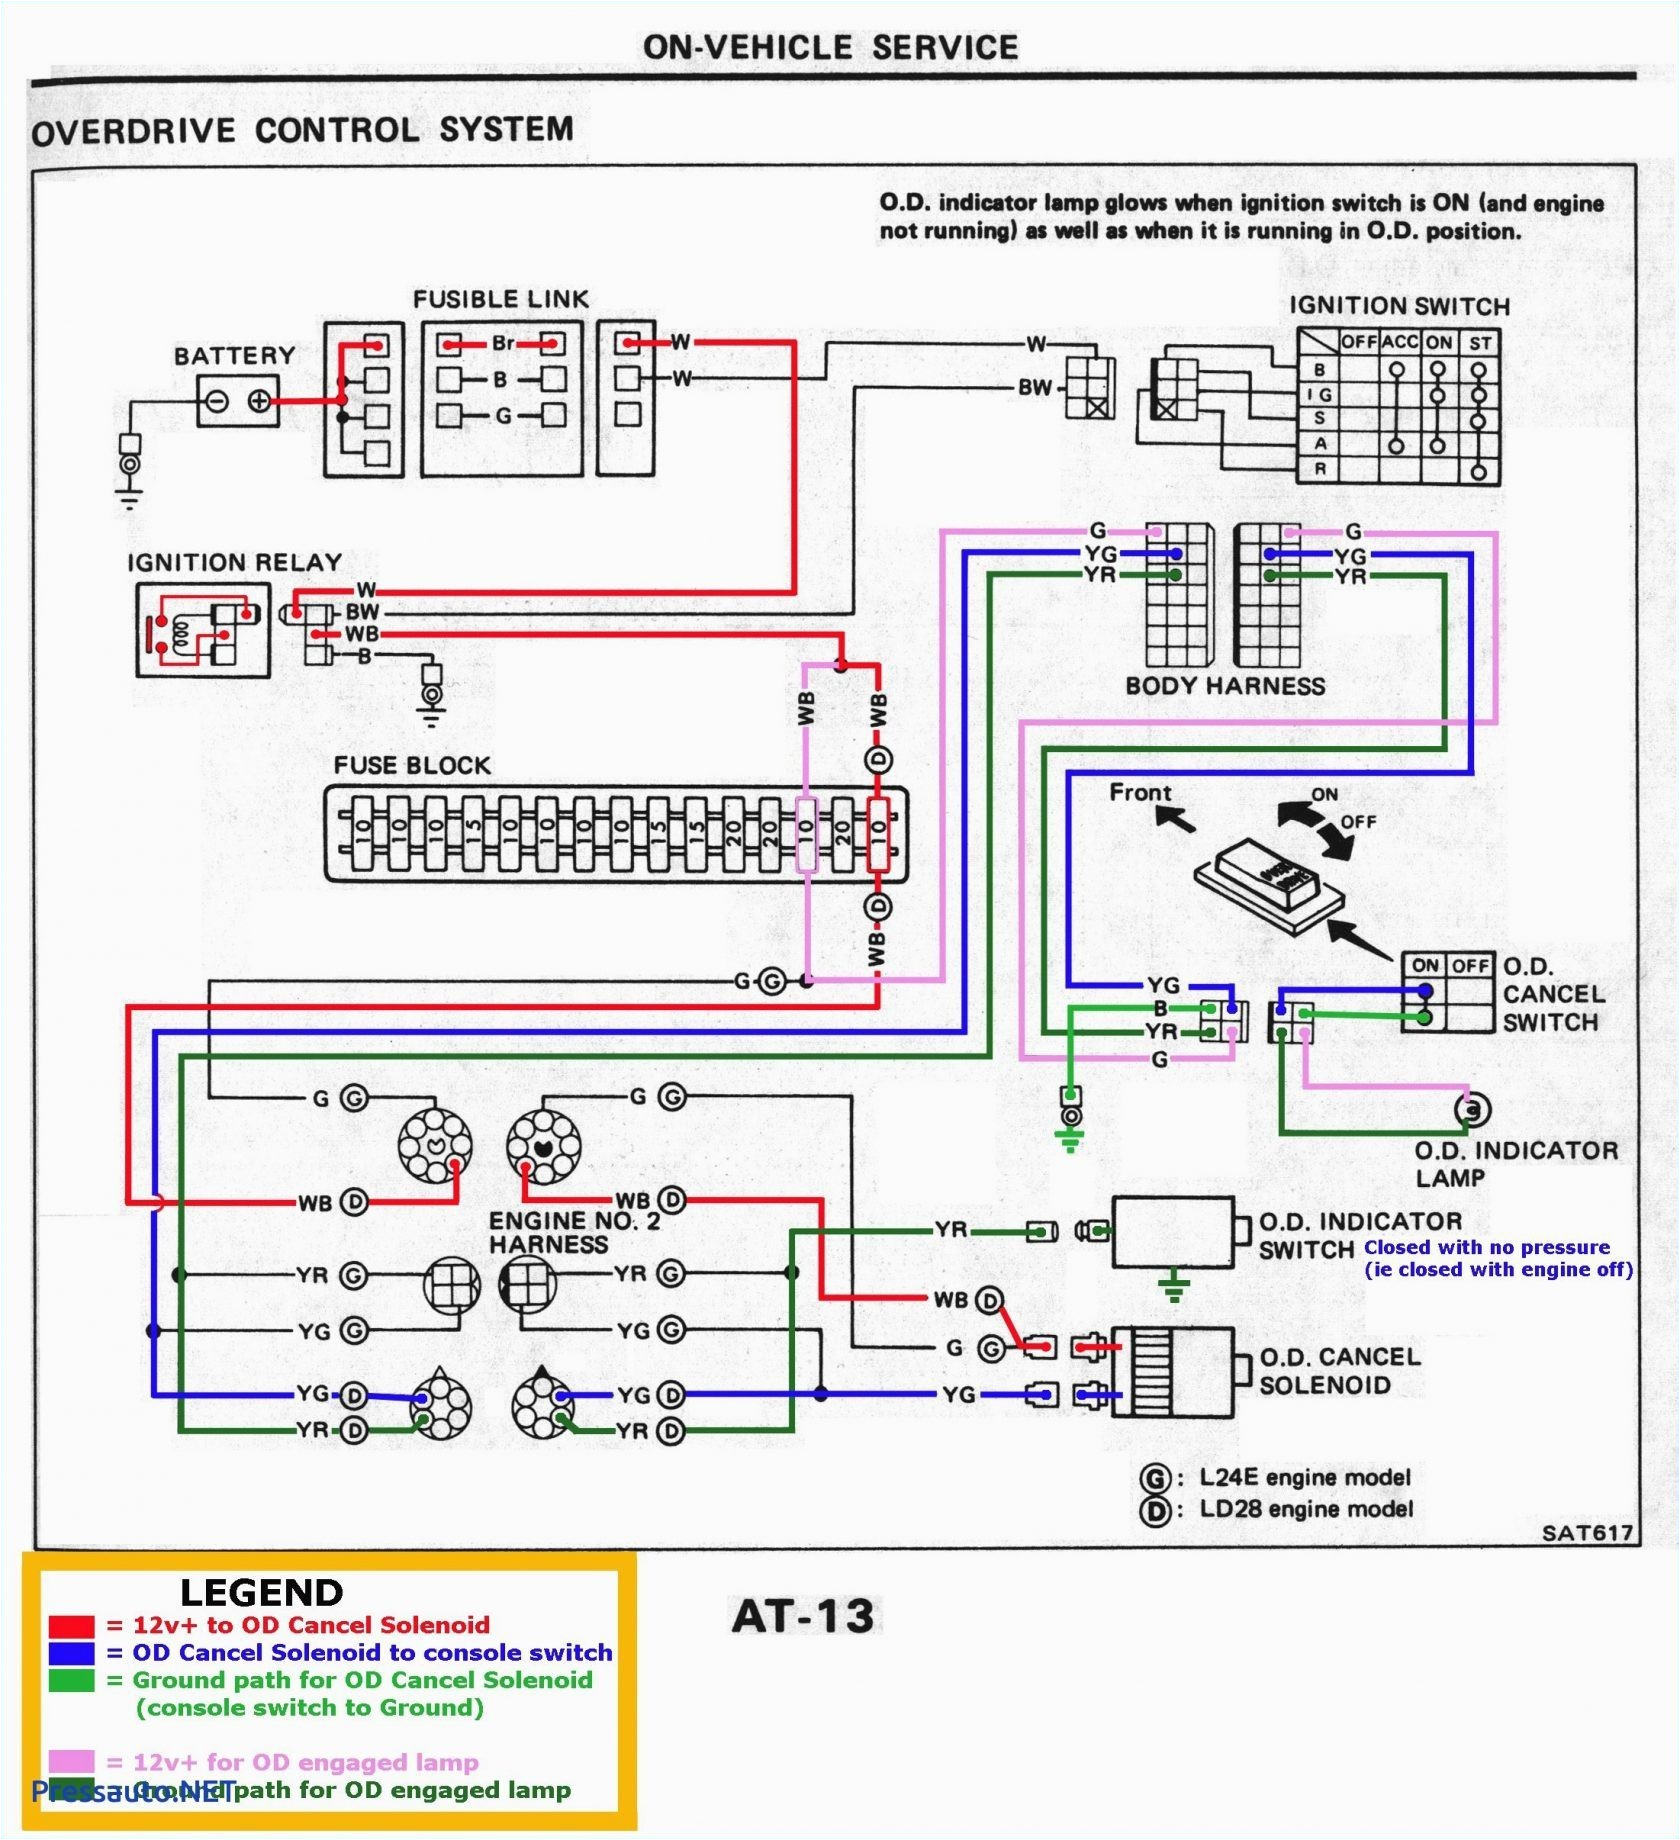 clear alternatives wiring diagram wiring diagram blog clear alternatives wiring diagram